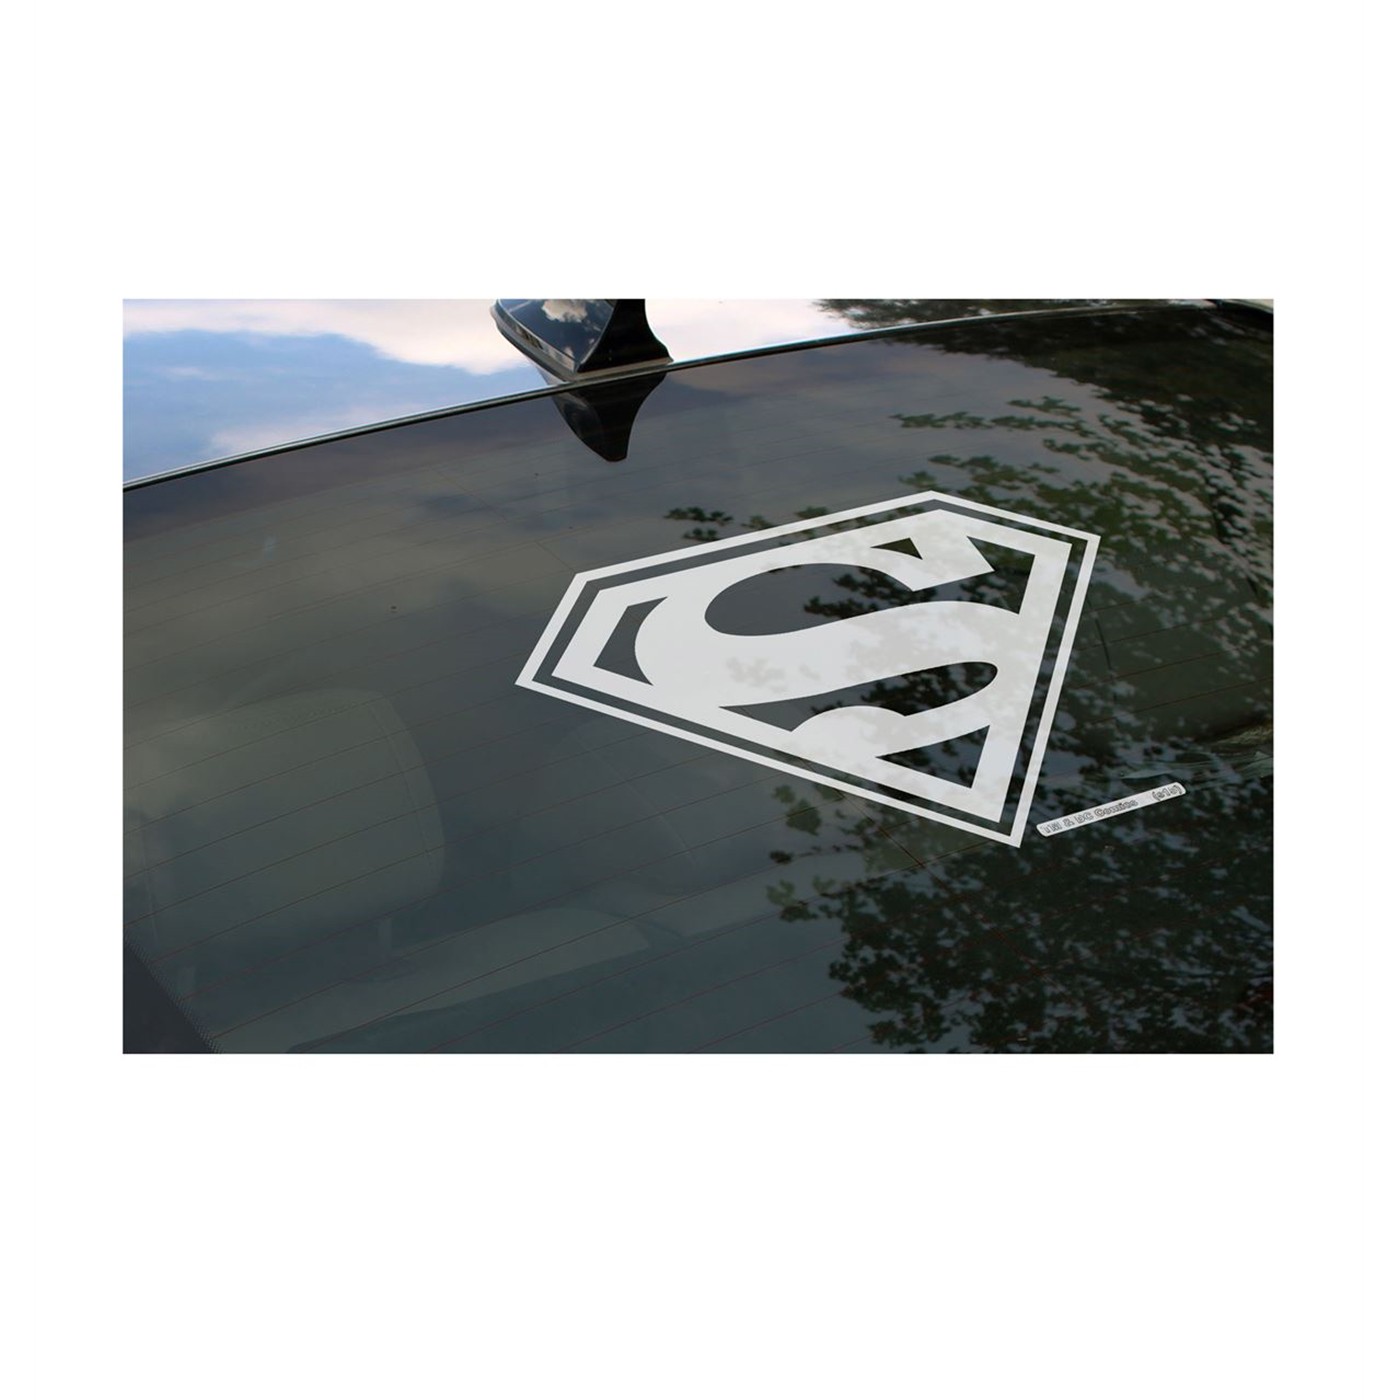 Superman Large Window Car Decal